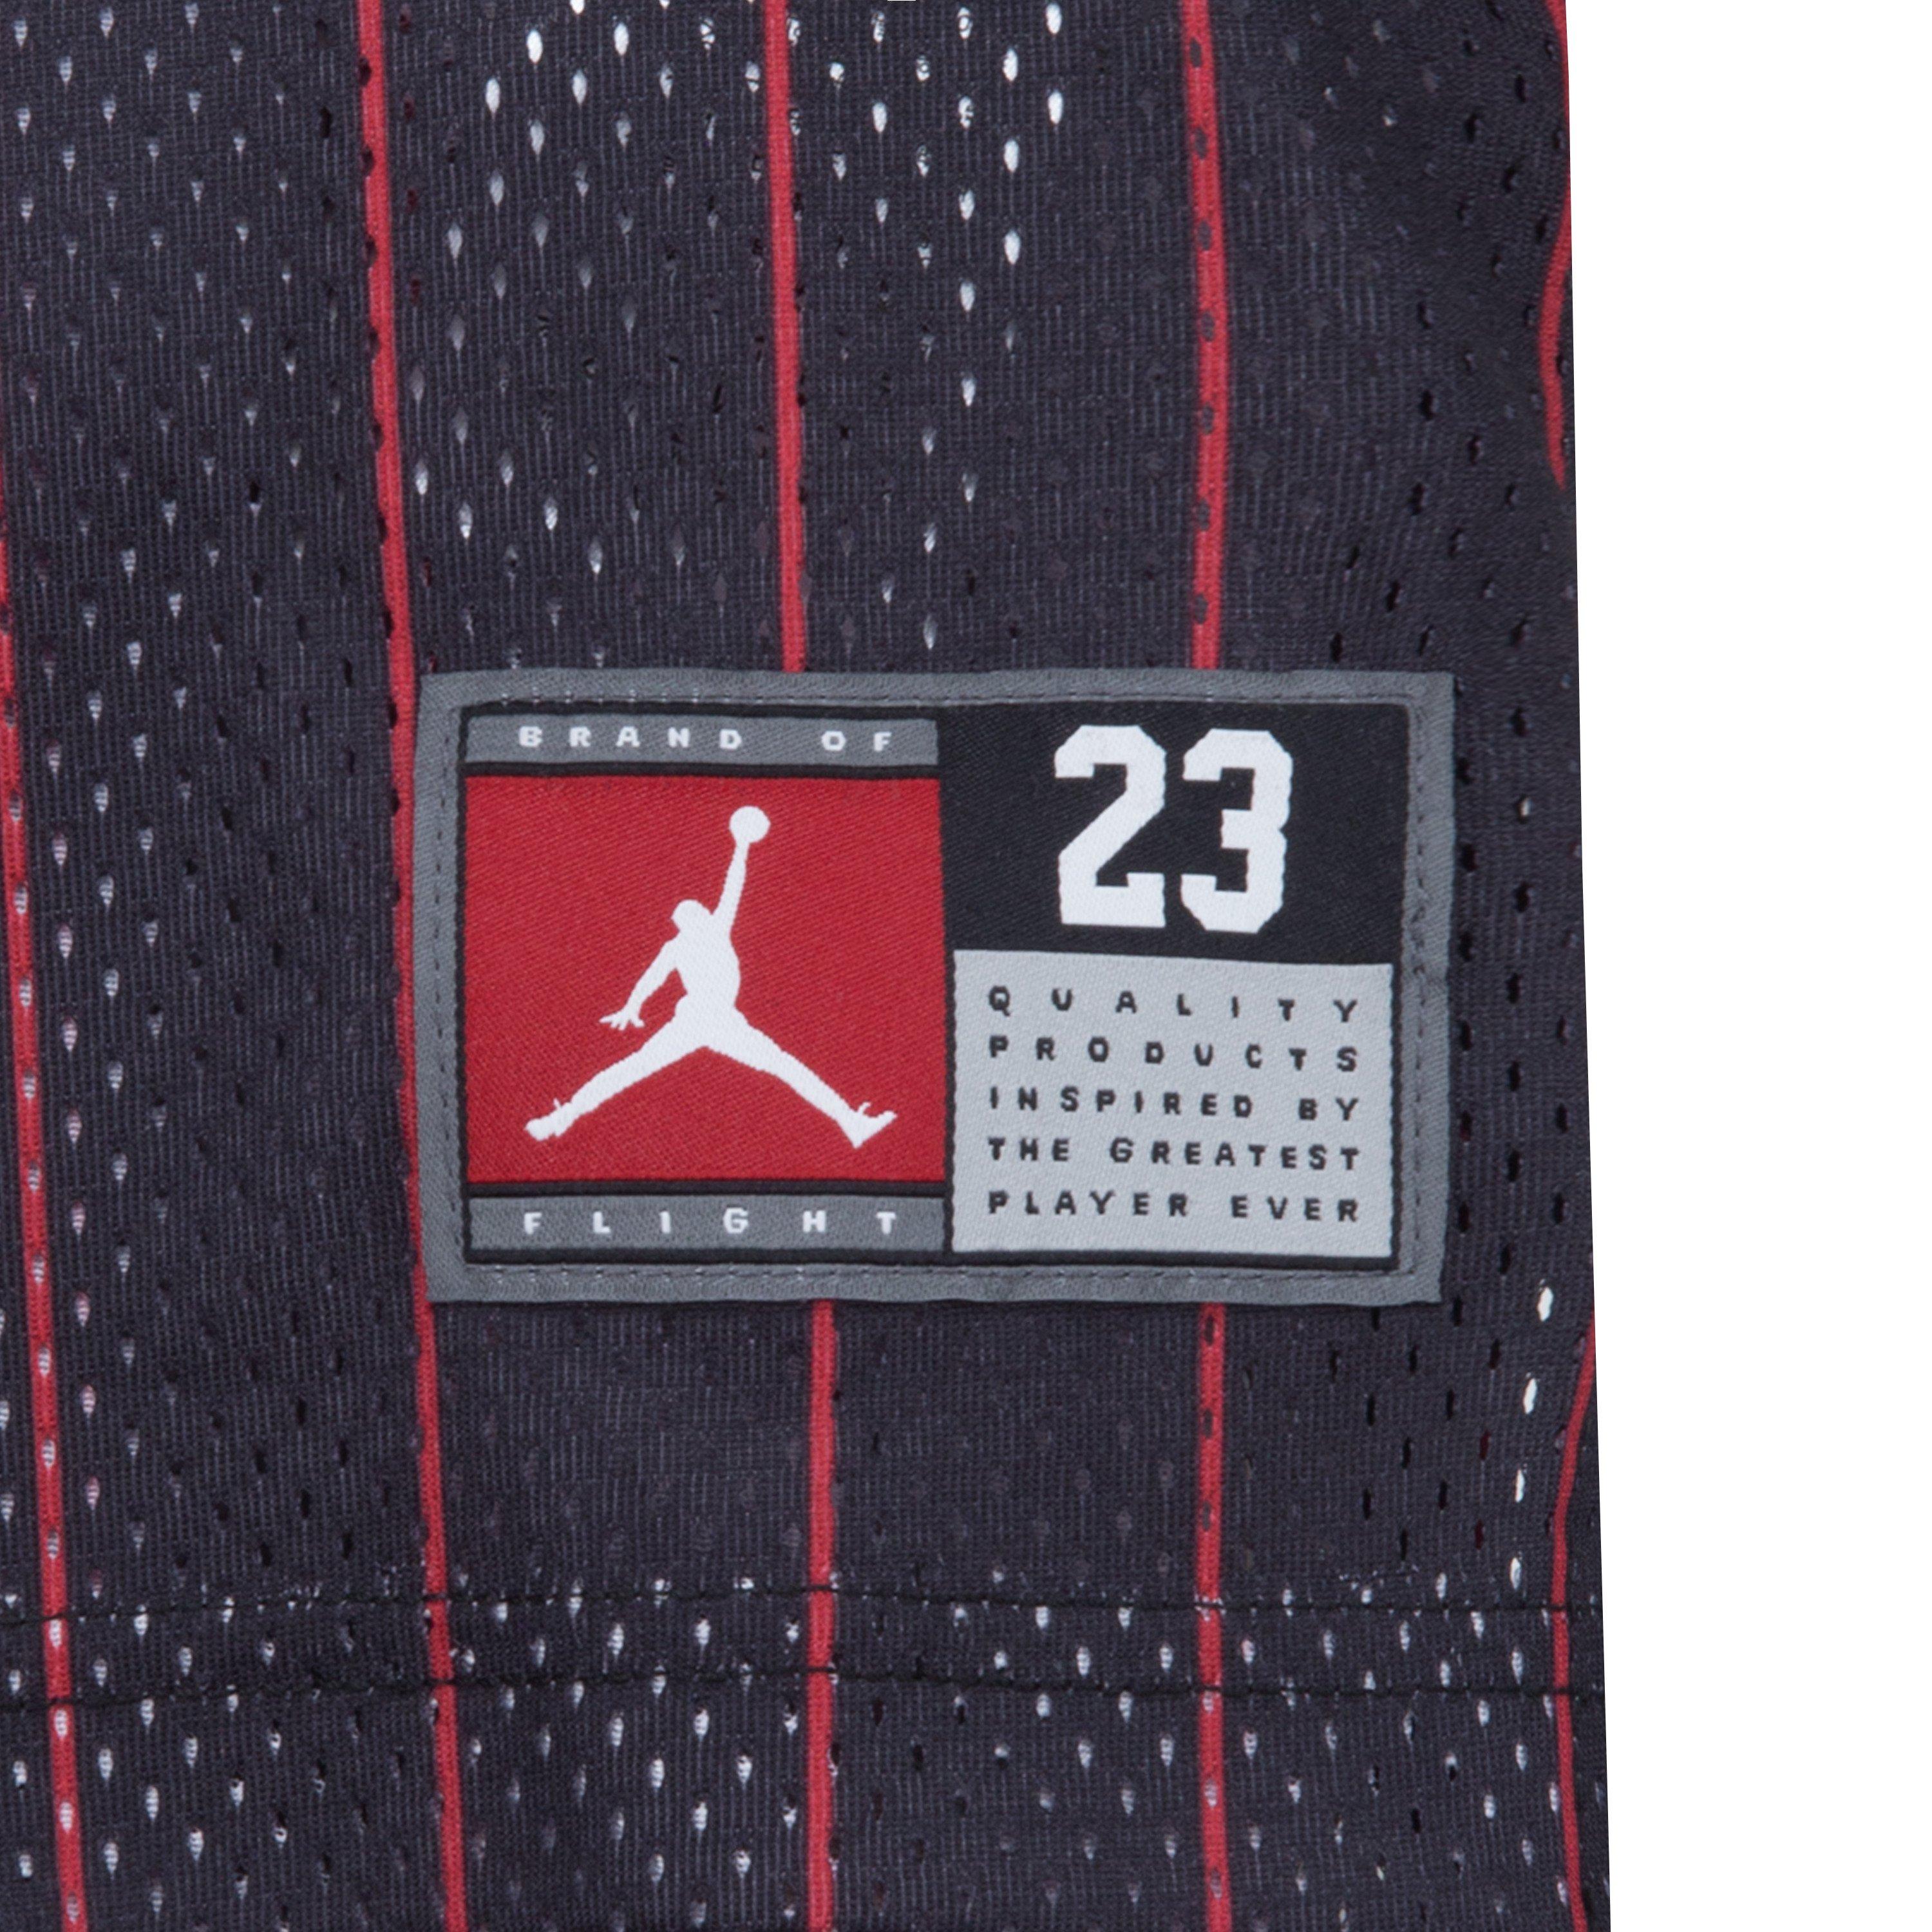 Bulls to wear retro Michael Jordan-inspired pinstripe jerseys this